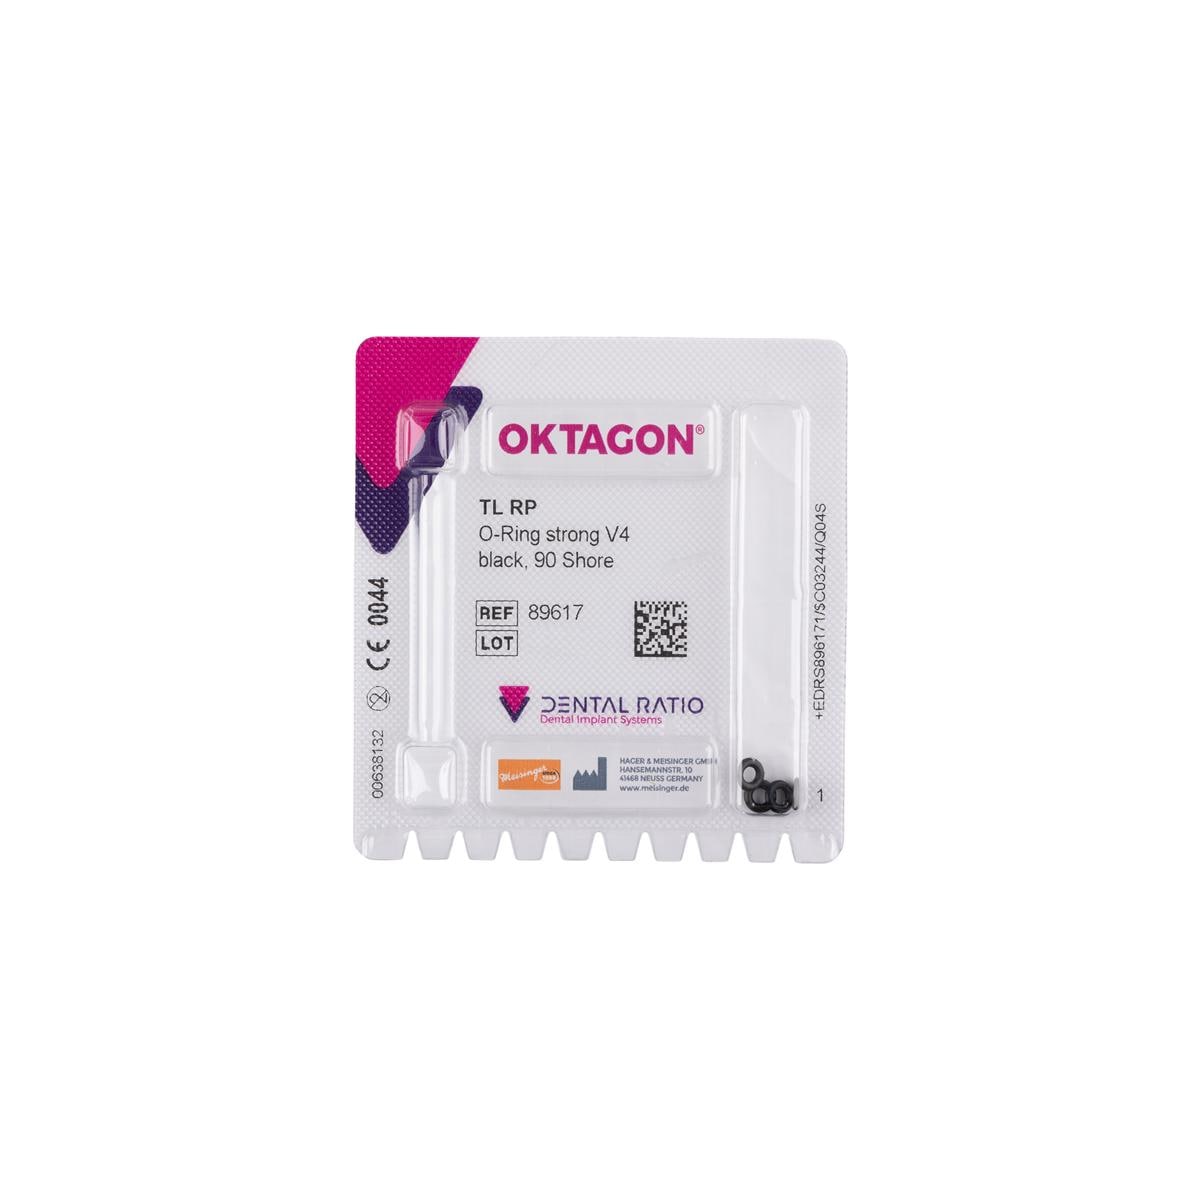 OKTAGON® Tissue Level Regular Platform O-Ring 90 Shore Black